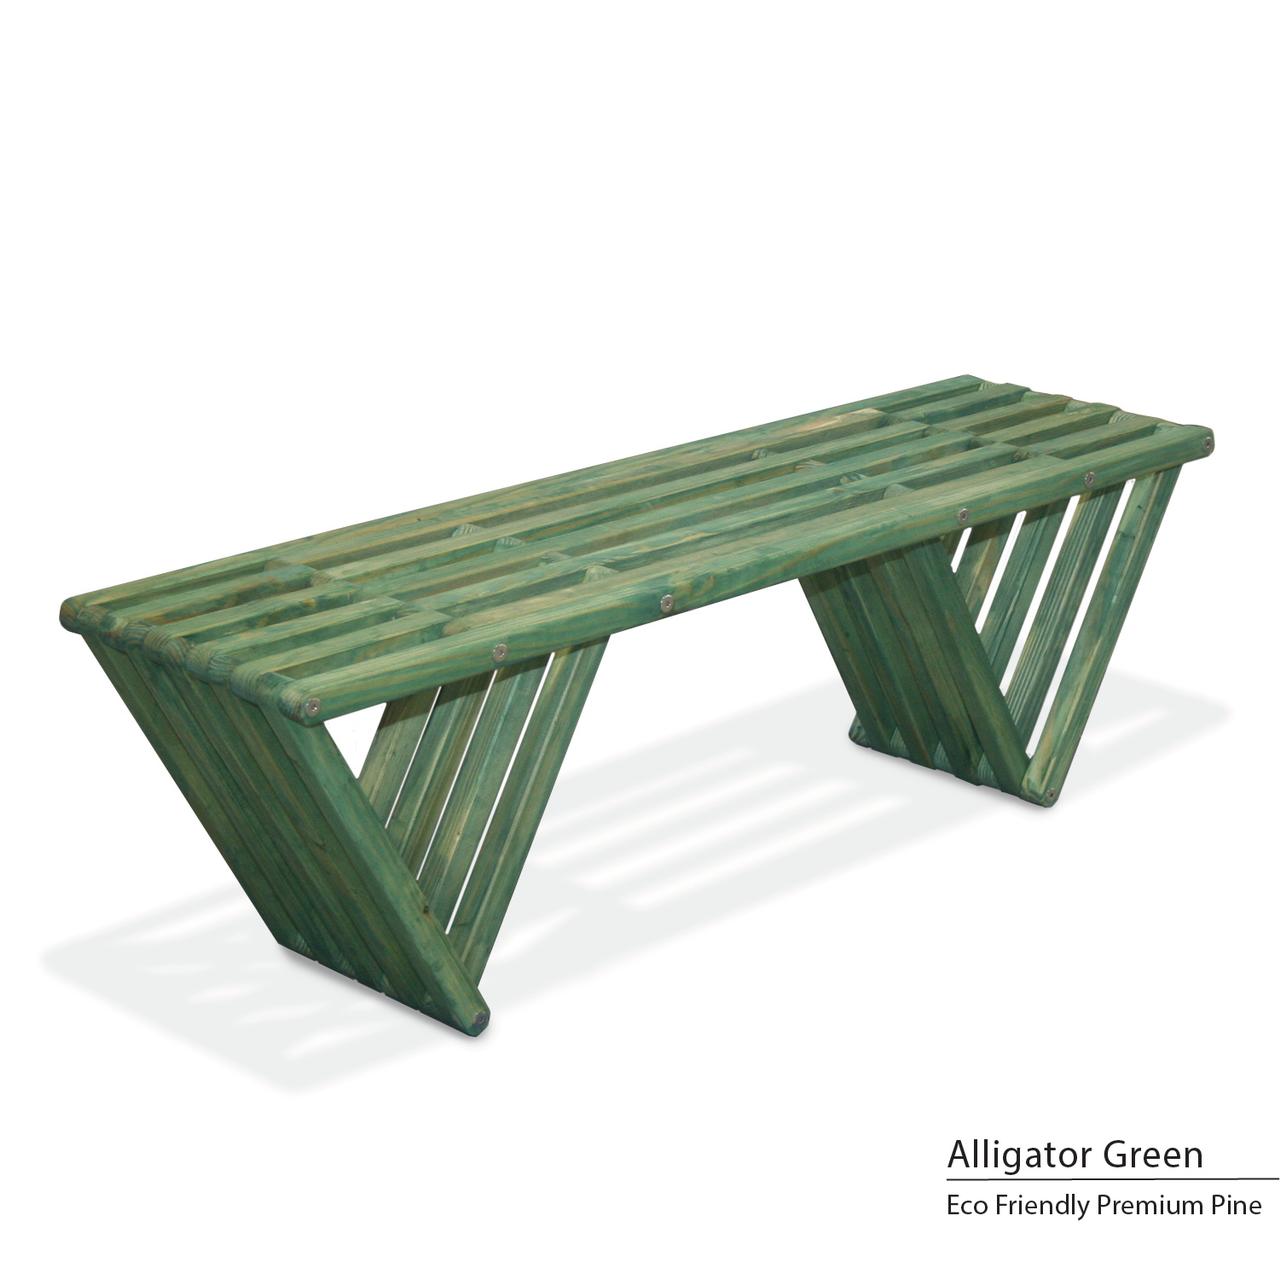 GloDea Bench X60, Alligator Green - image 1 of 5